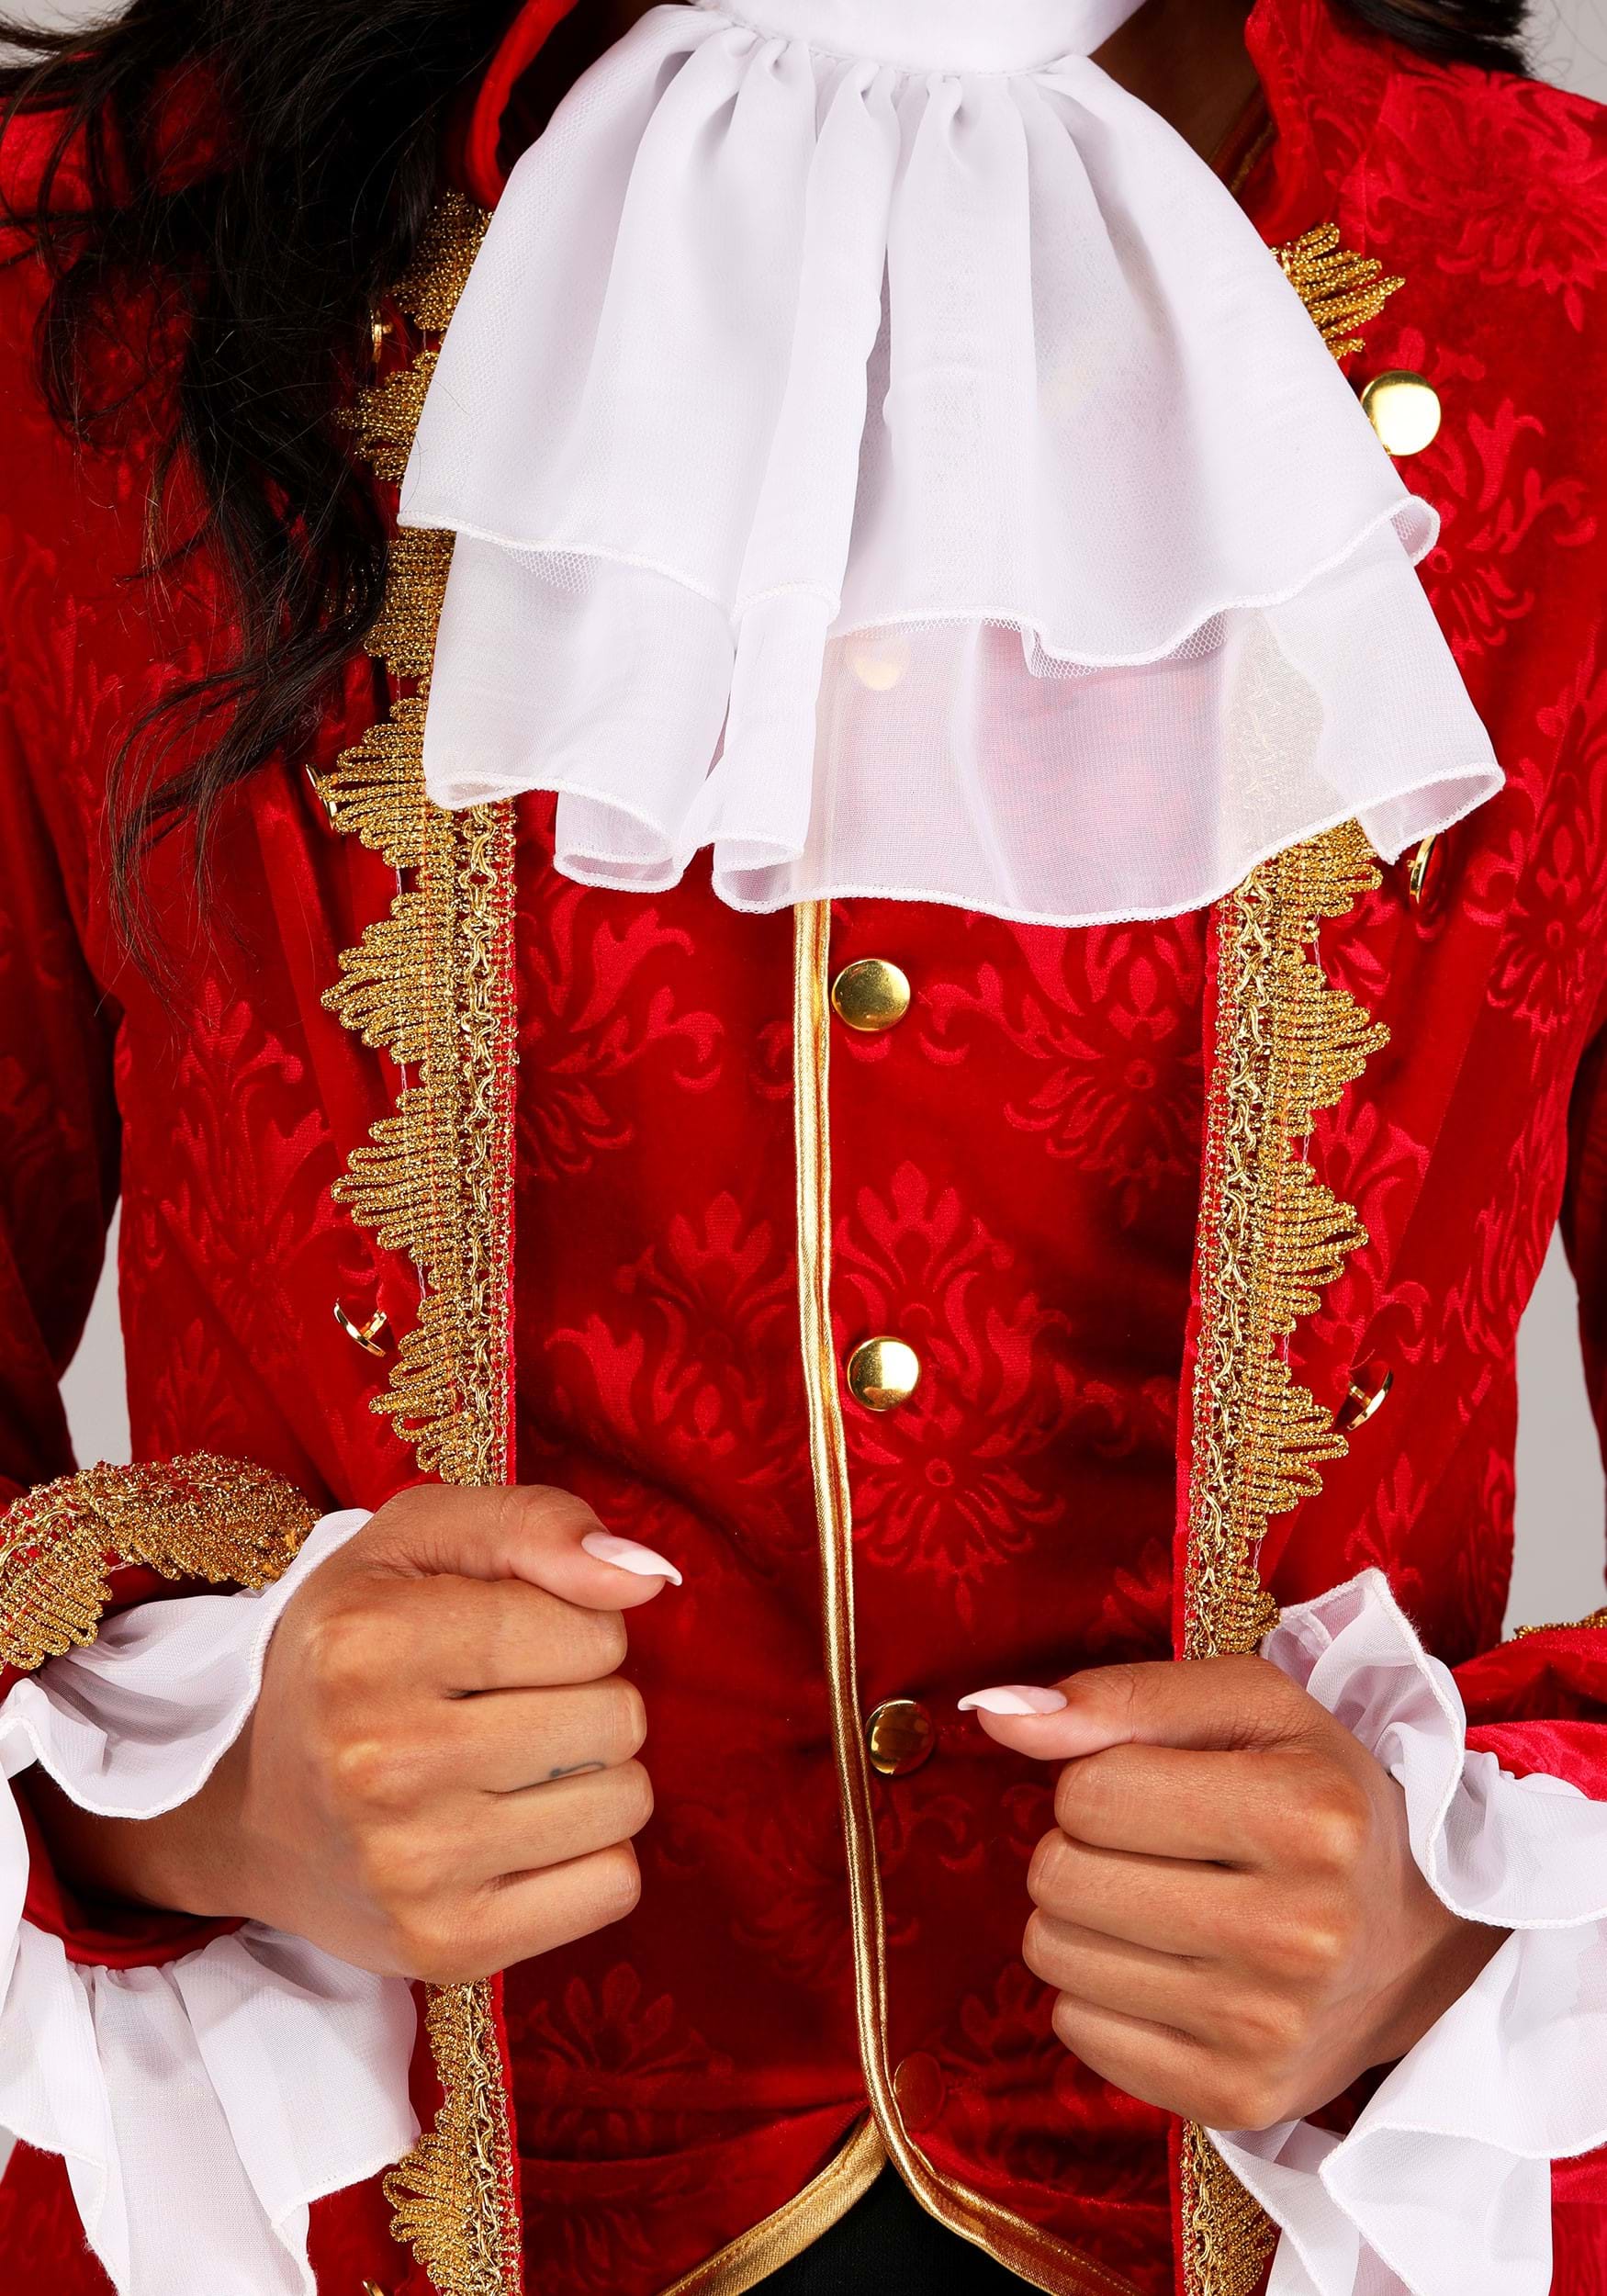 Ultimate Captain Hook Men's Costume | Adult | Mens | Black/Red/White | XS | FUN Costumes